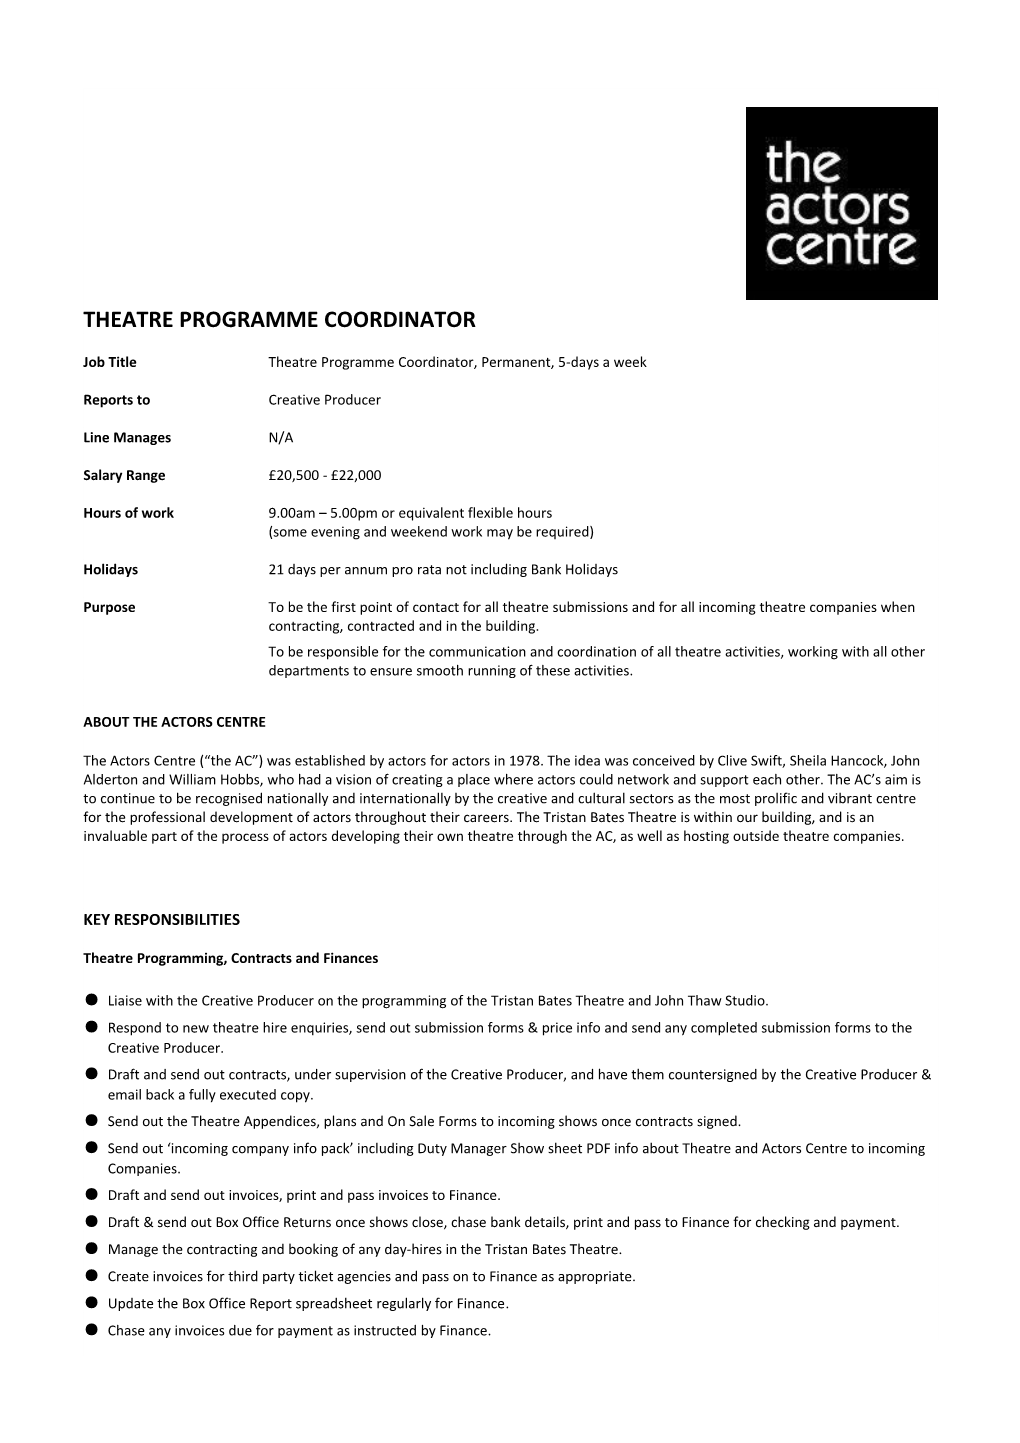 Theatre Programme Coordinator